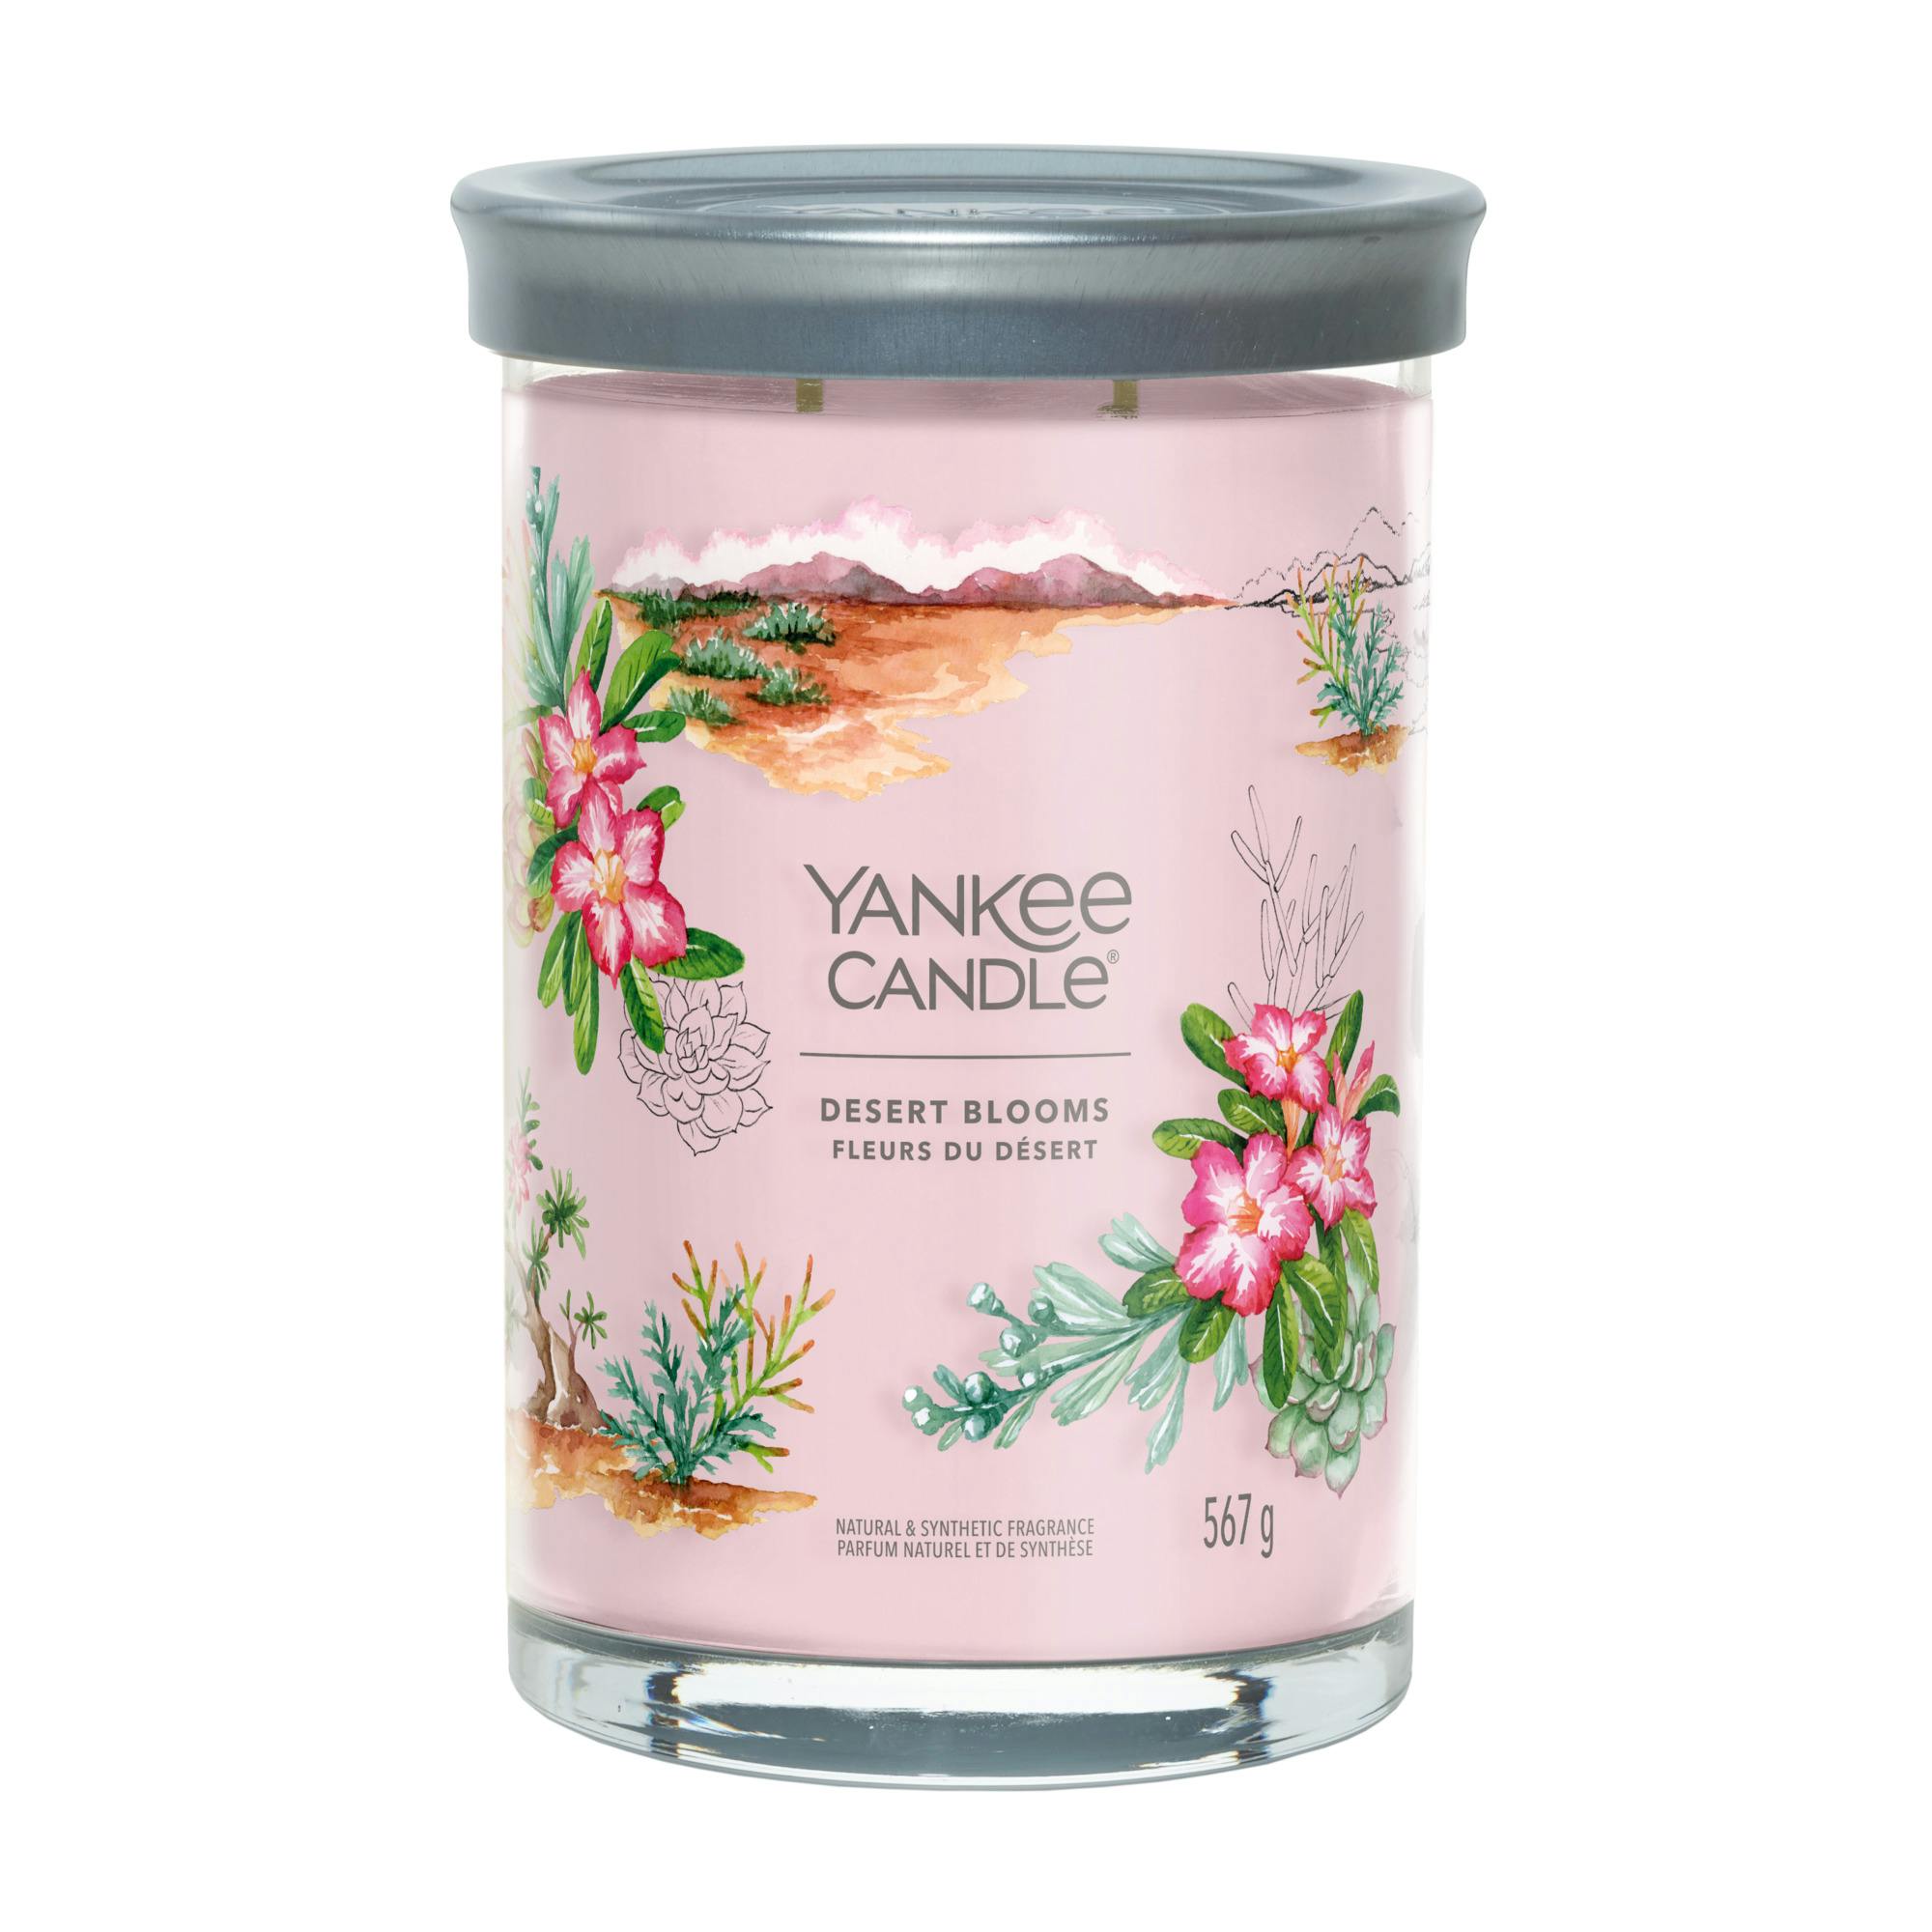 Yankee Candle Signature Large Jar Desert Blooms 567 g